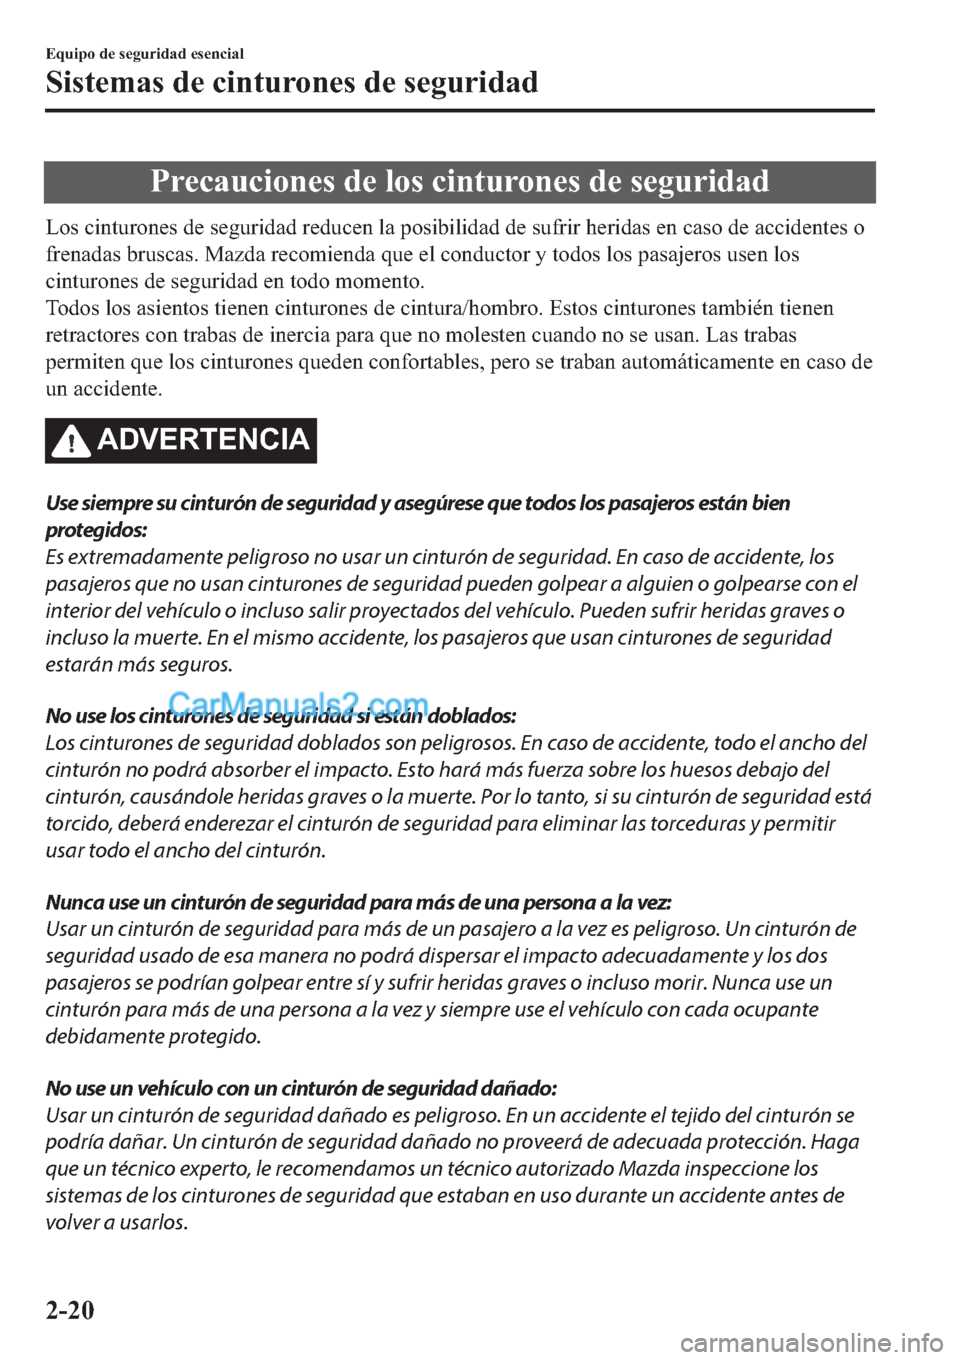 MAZDA MODEL 2 2019  Manual del propietario (in Spanish) �3�U�H�F�D�X�F�L�R�Q�H�V��G�H��O�R�V��F�L�Q�W�X�U�R�Q�H�V��G�H��V�H�J�X�U�L�G�D�G
�/�R�V��F�L�Q�W�X�U�R�Q�H�V��G�H��V�H�J�X�U�L�G�D�G��U�H�G�X�F�H�Q��O�D��S�R�V�L�E�L�O�L�G�D�G��G�H��V�X�